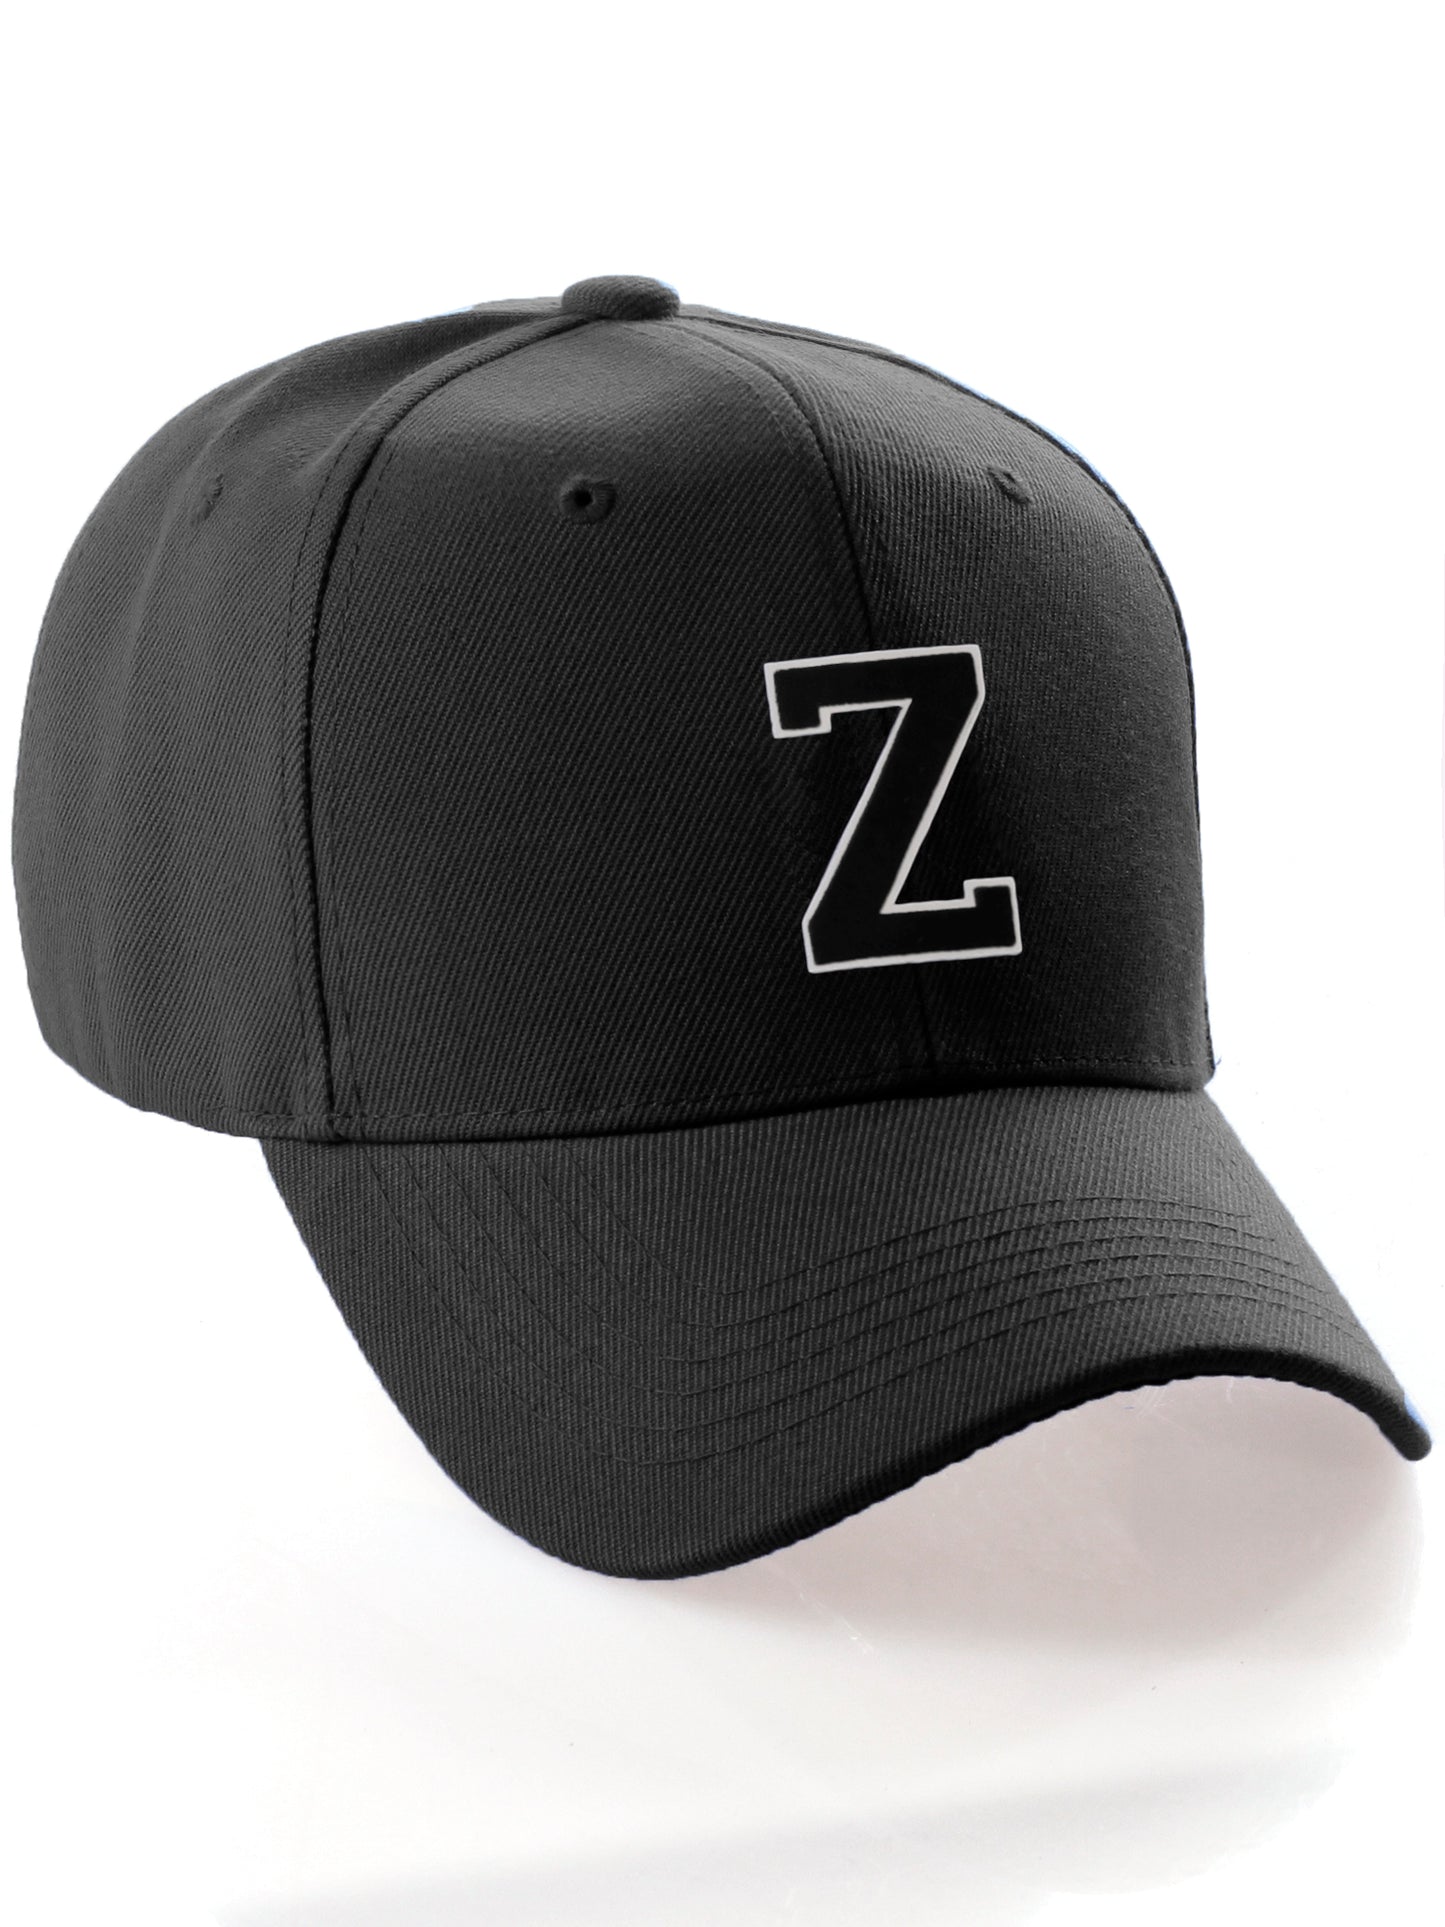 Classic Baseball hat Custom A to Z Initial Team Letter, Black Cap White Black